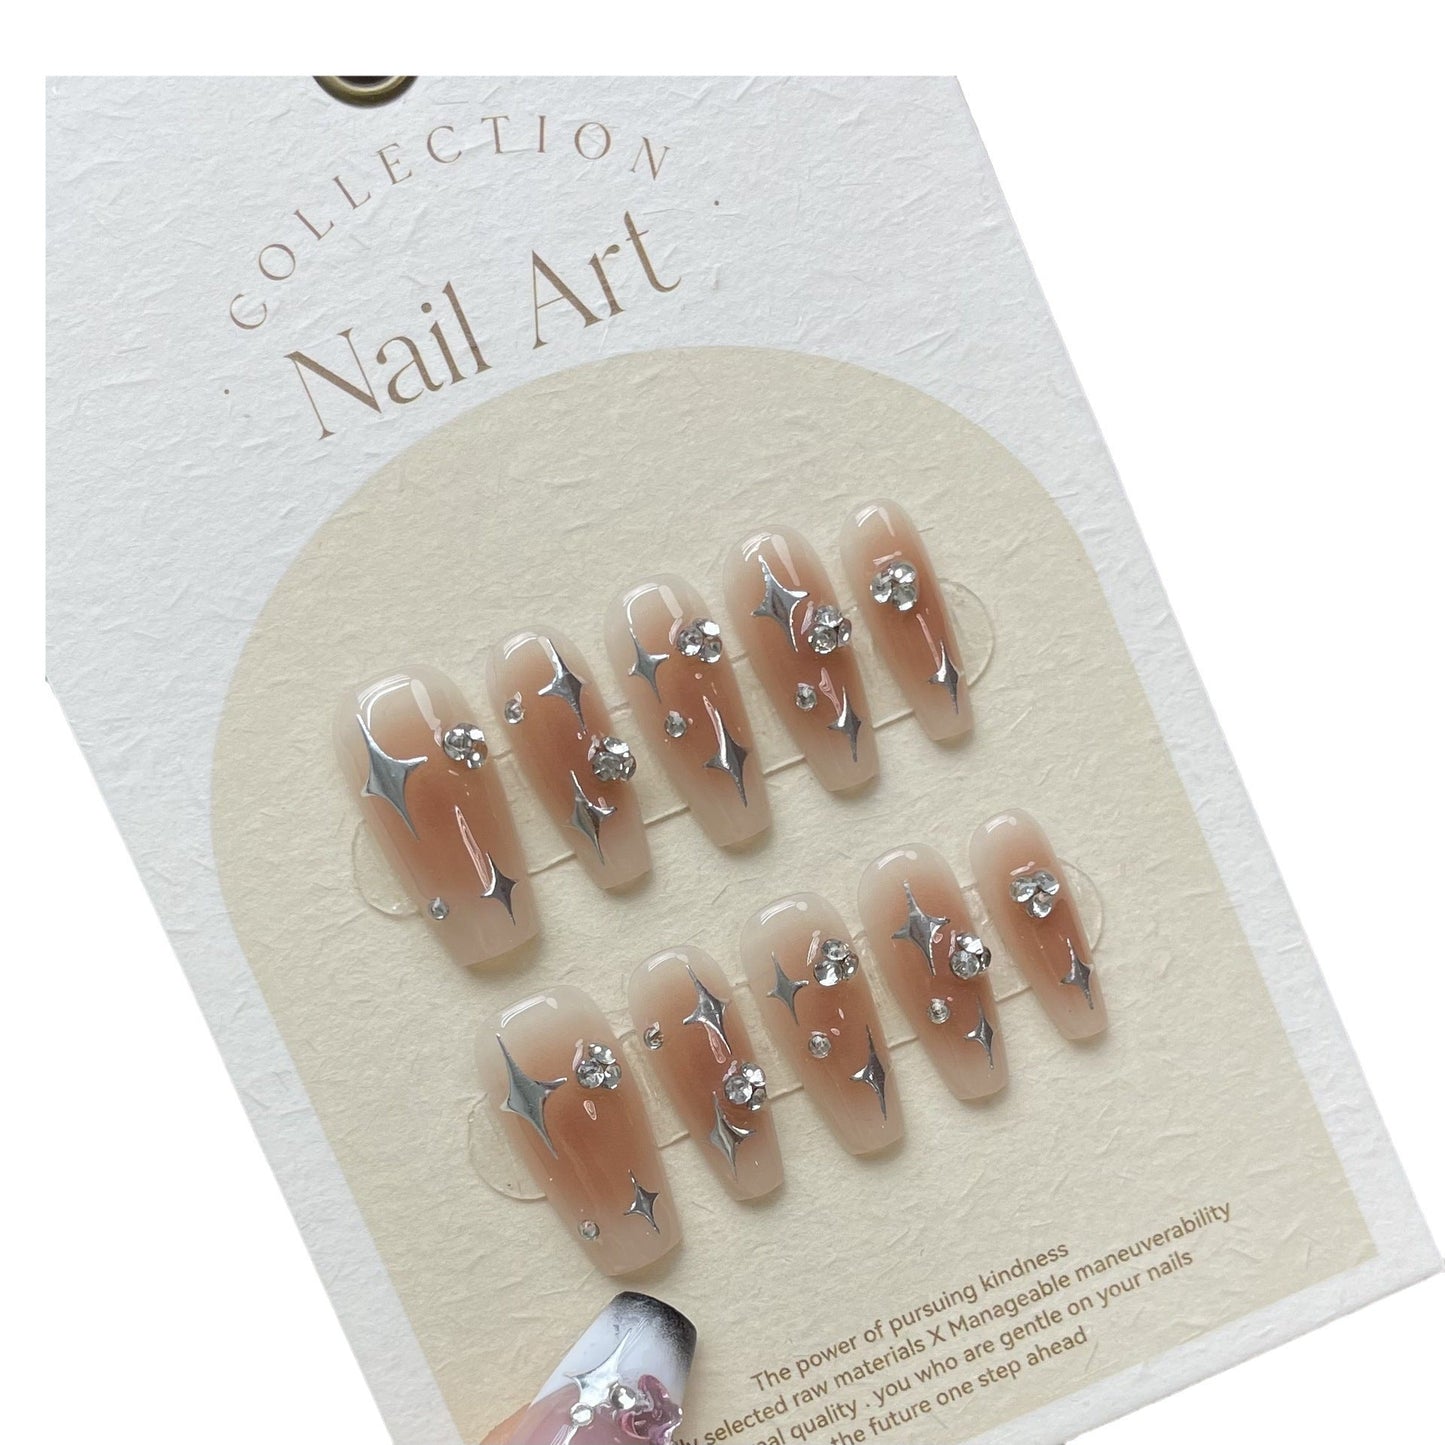 884 Star Rhinestone style press on nails 100% handmade false nails nude color